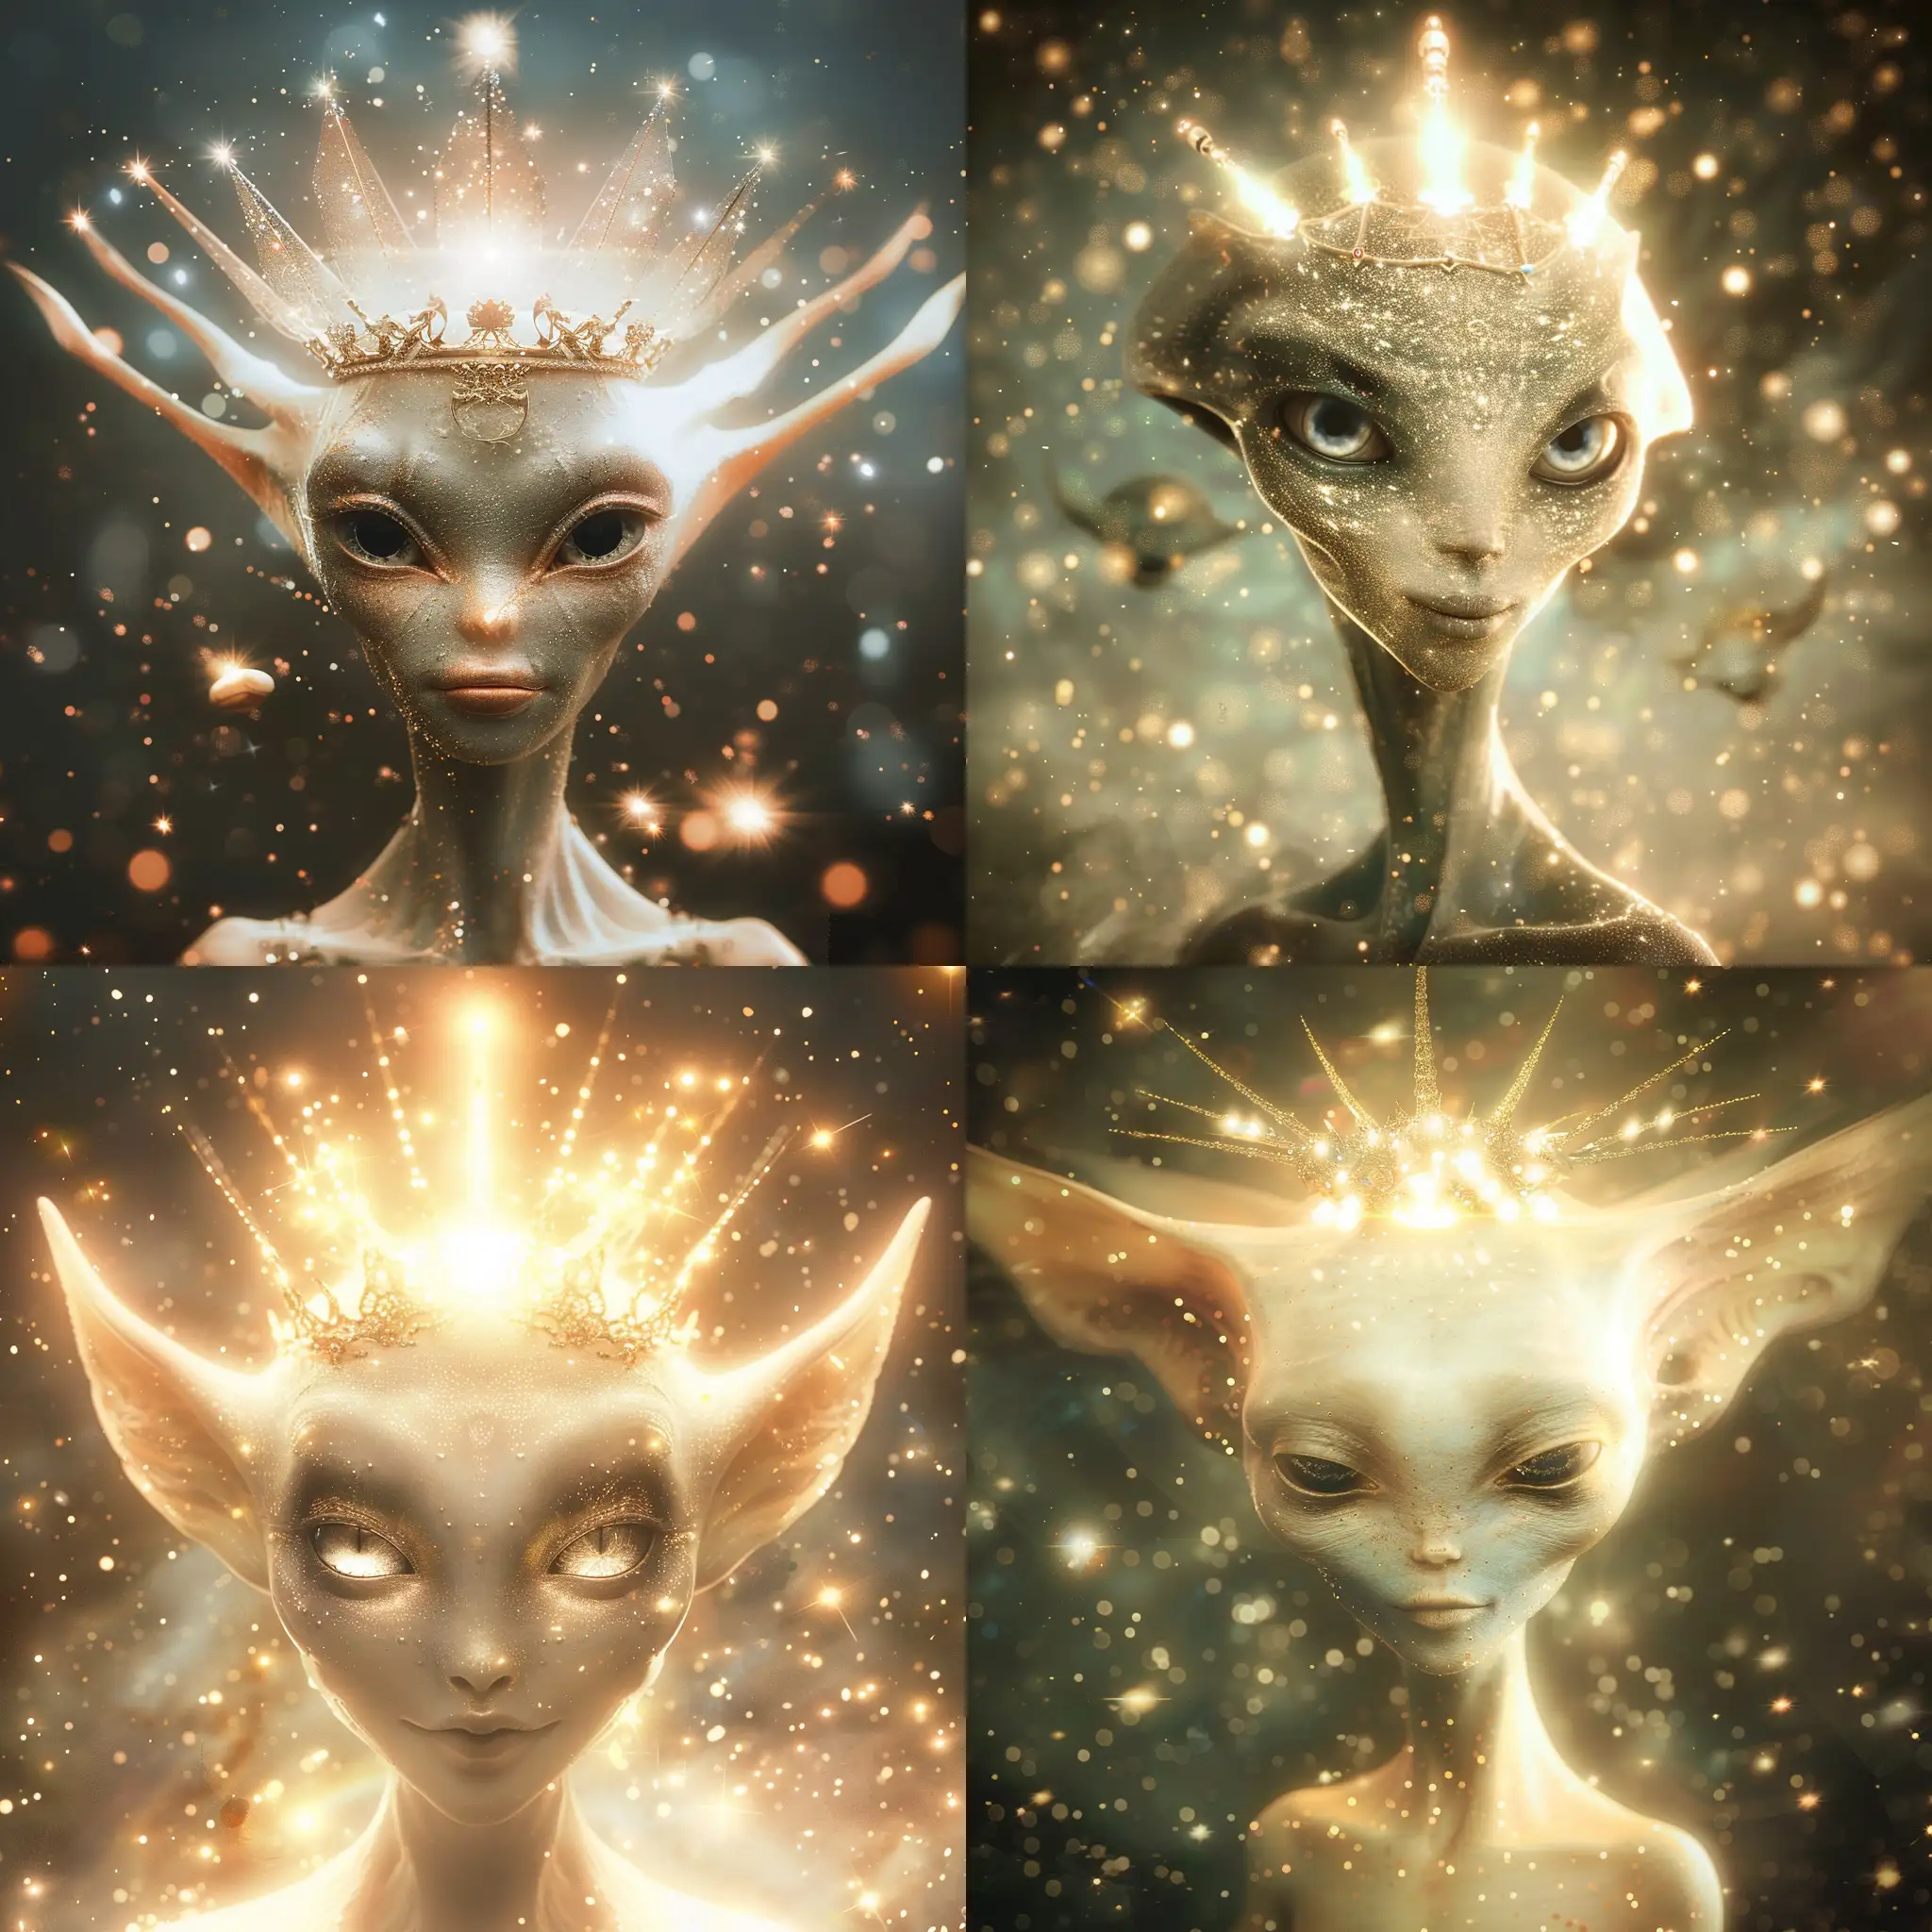 Gentle-Alien-King-with-Luminous-Crown-Amidst-Celestial-Splendor